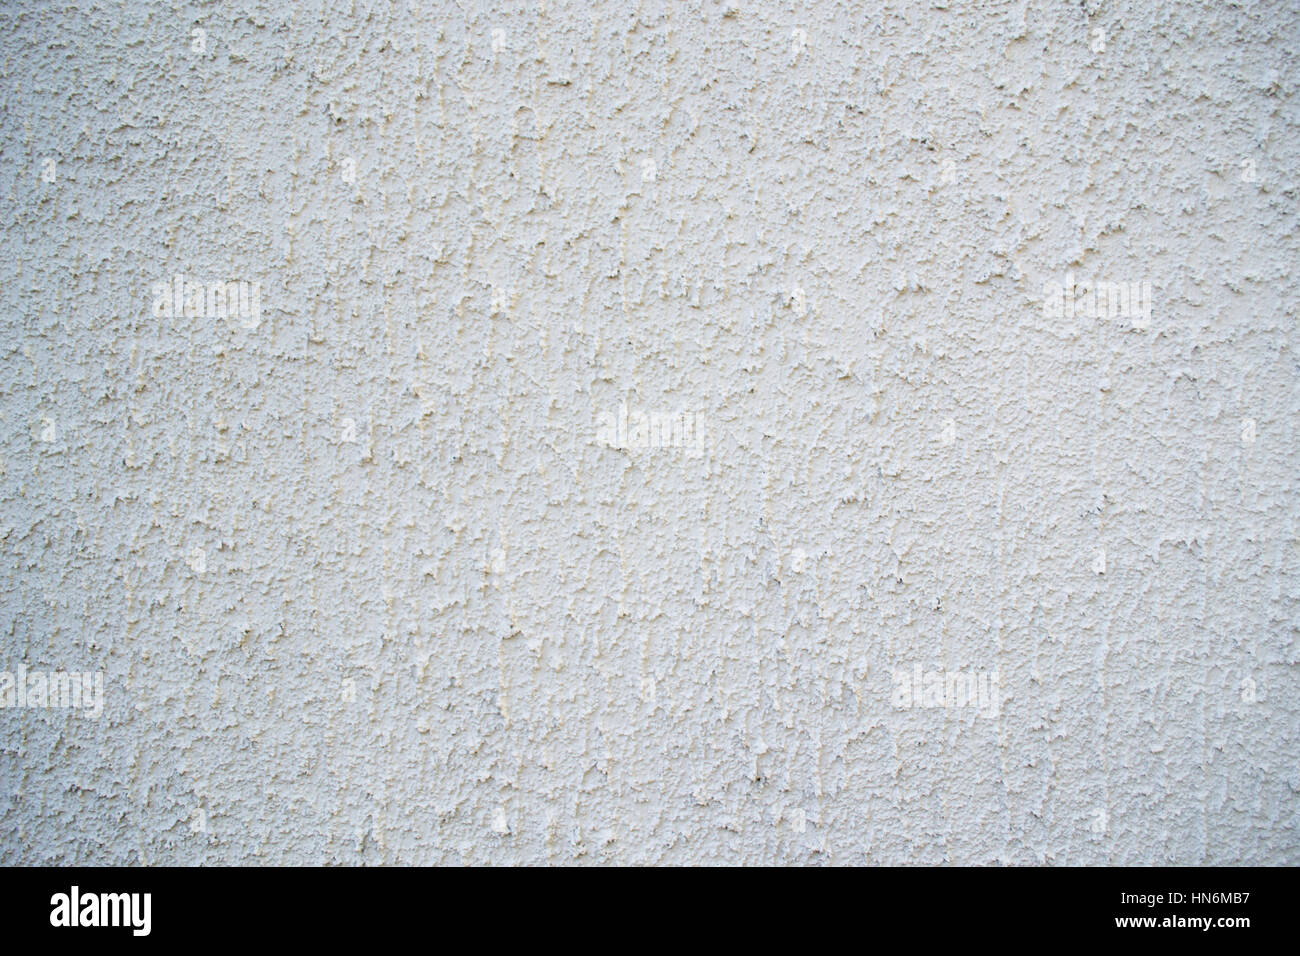 White textured wall background Stock Photo